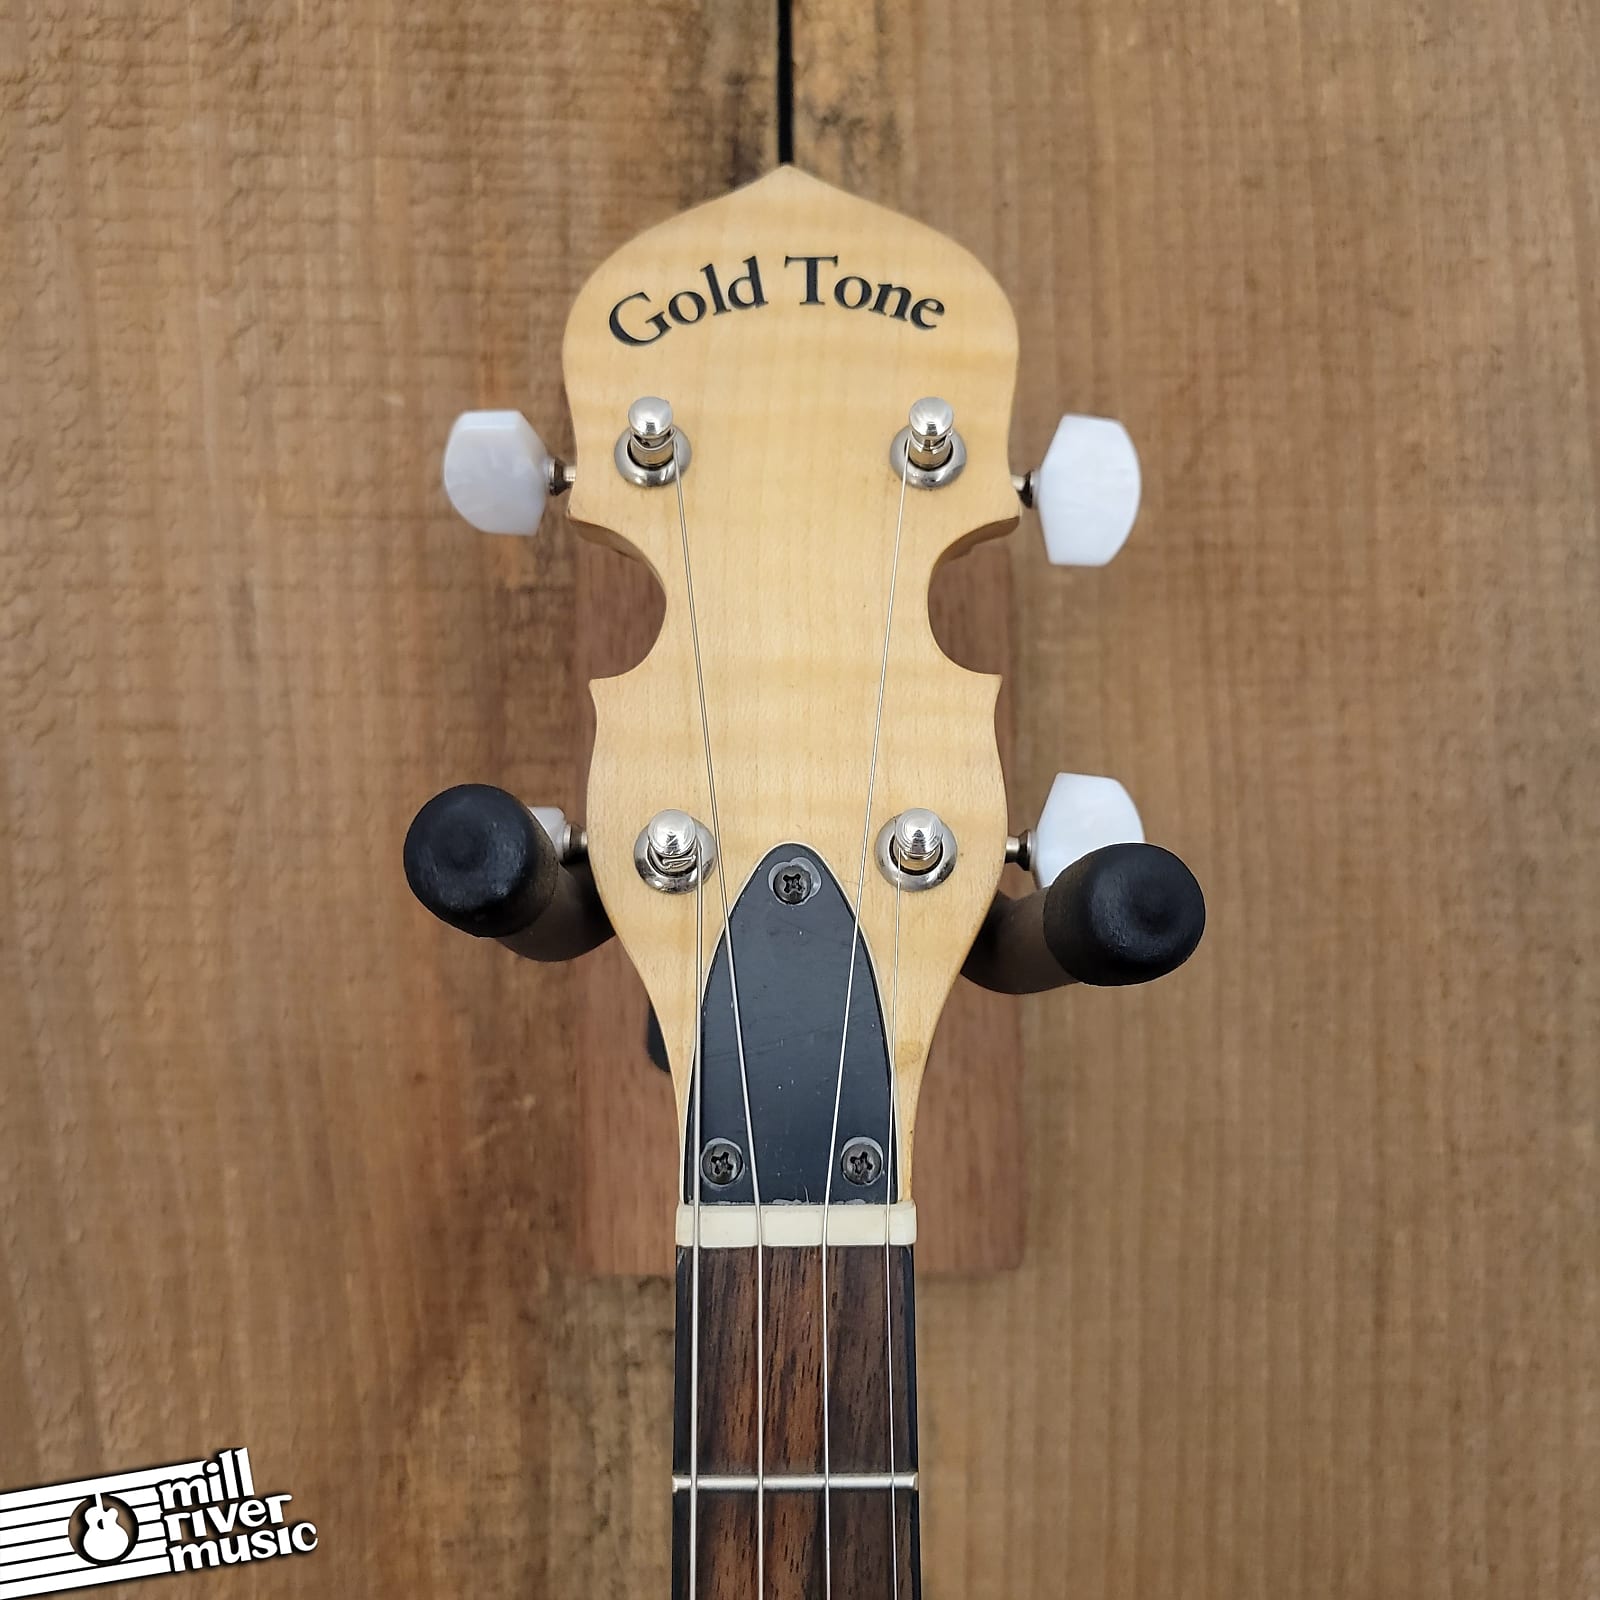 Gold Tone CC-100-RIT Tenor Banjo w/ Gig Bag Used